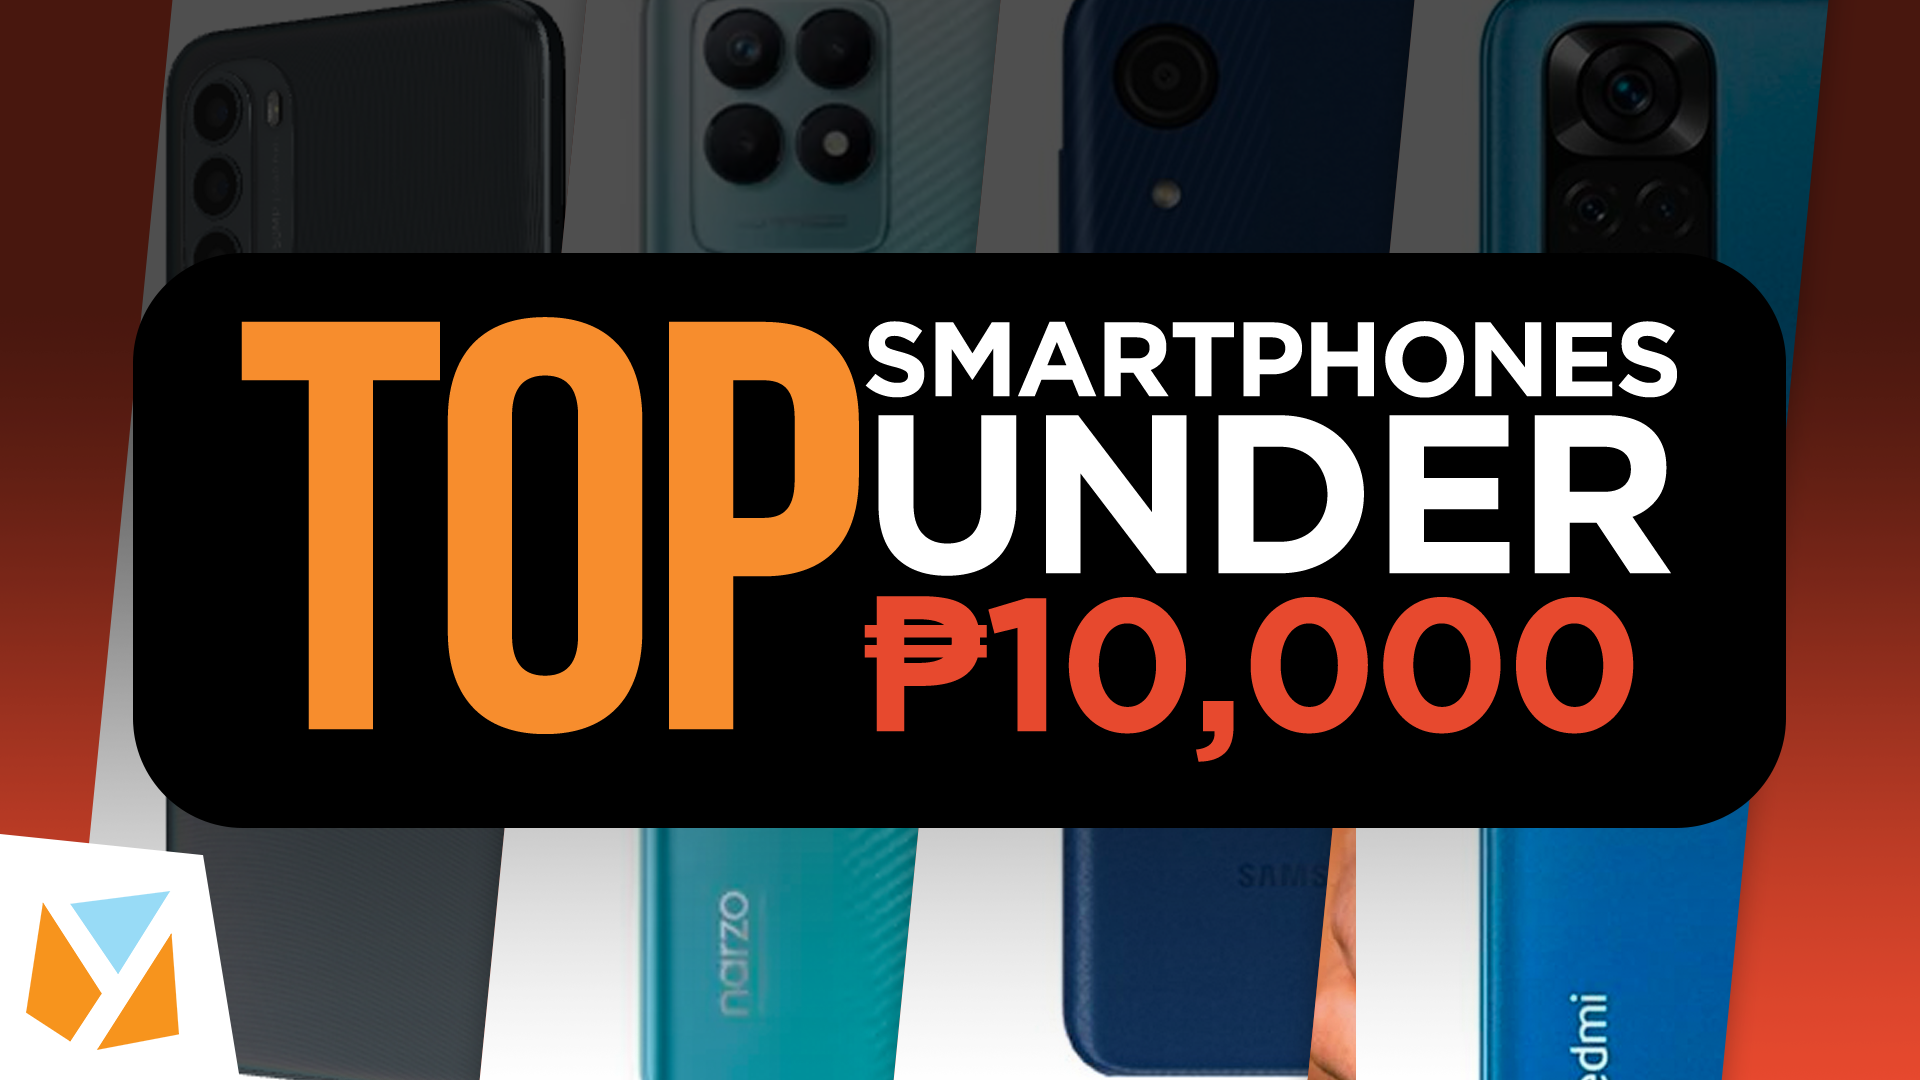 Watch: Budget Smartphones under Php10,000